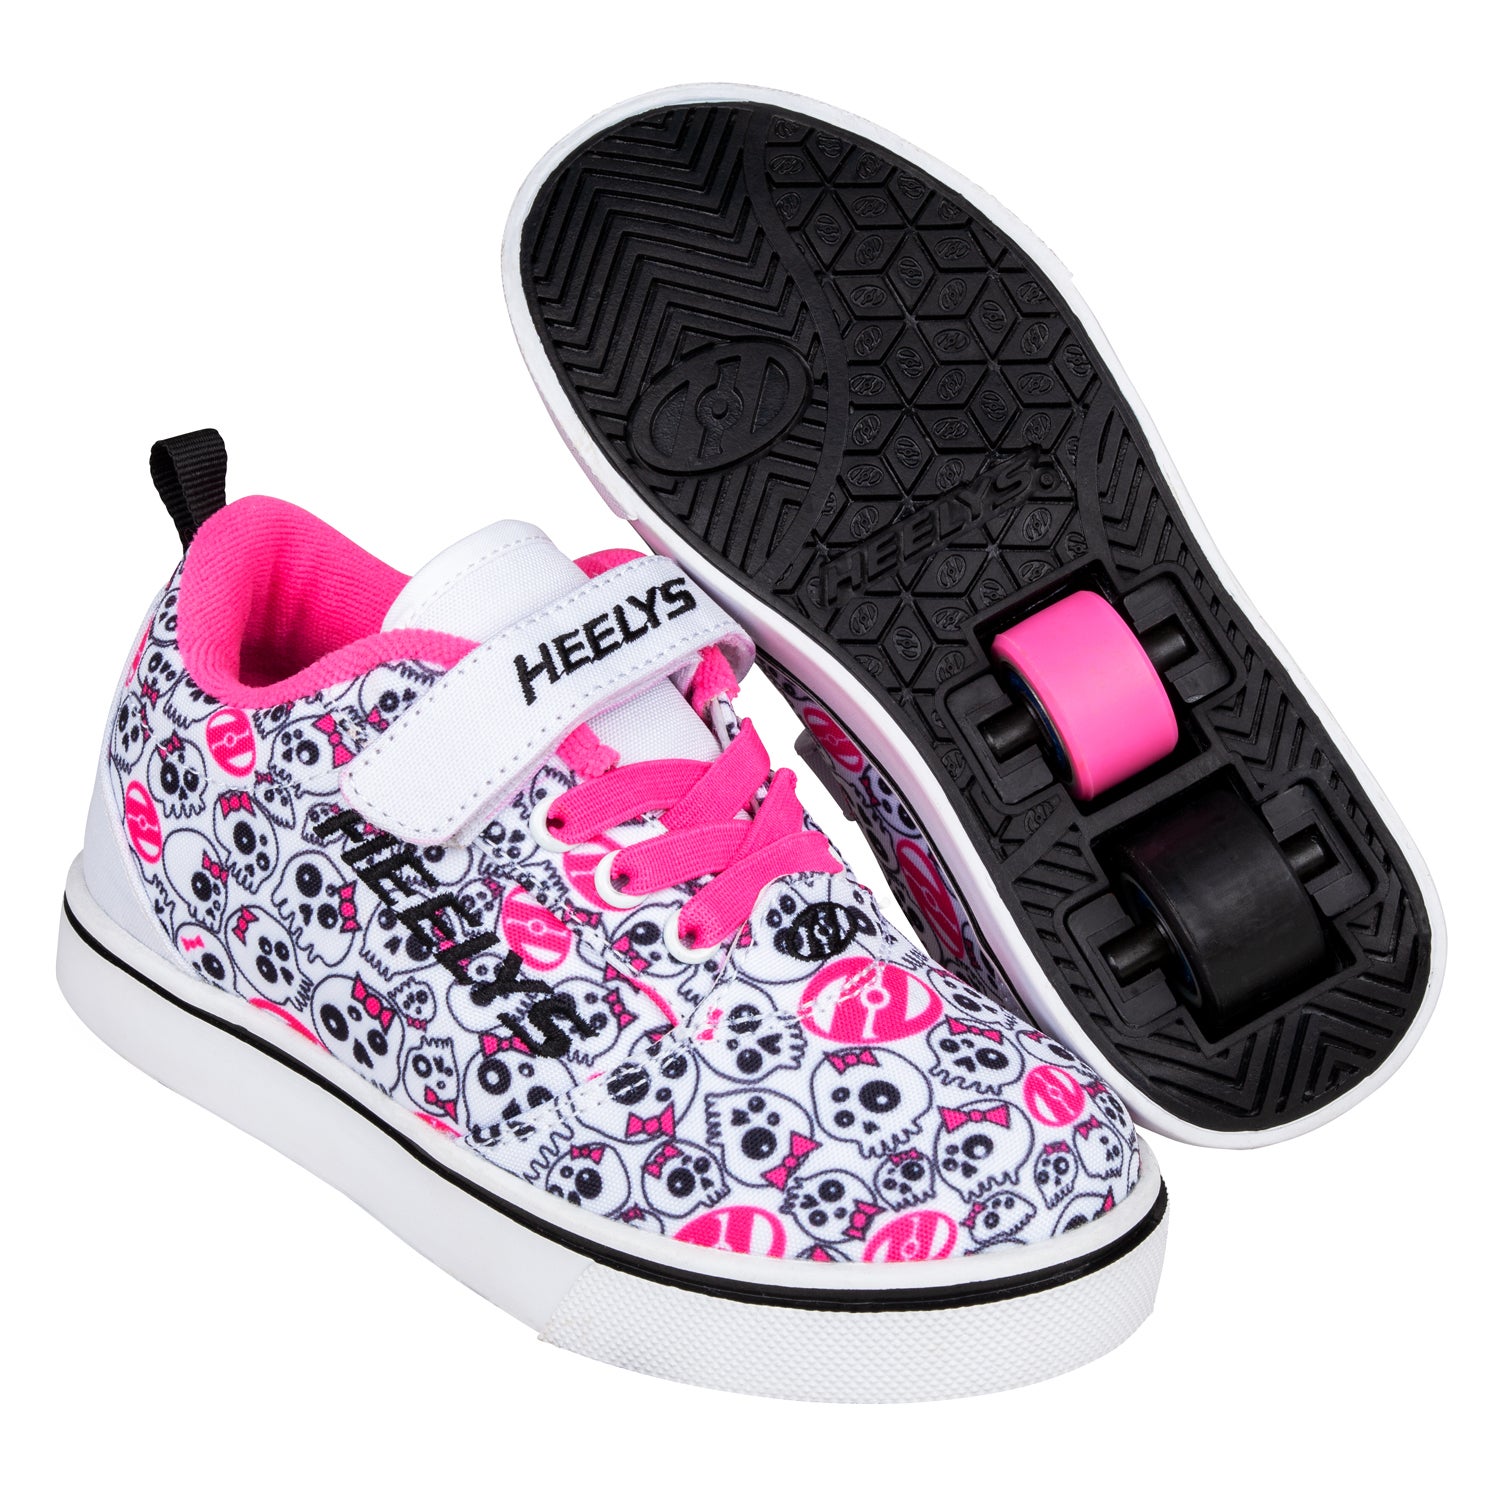 White/Black/Hot Pink/Skulls Heelys Original Wheels Shoes X2 Pro 20 Girls Heelys 